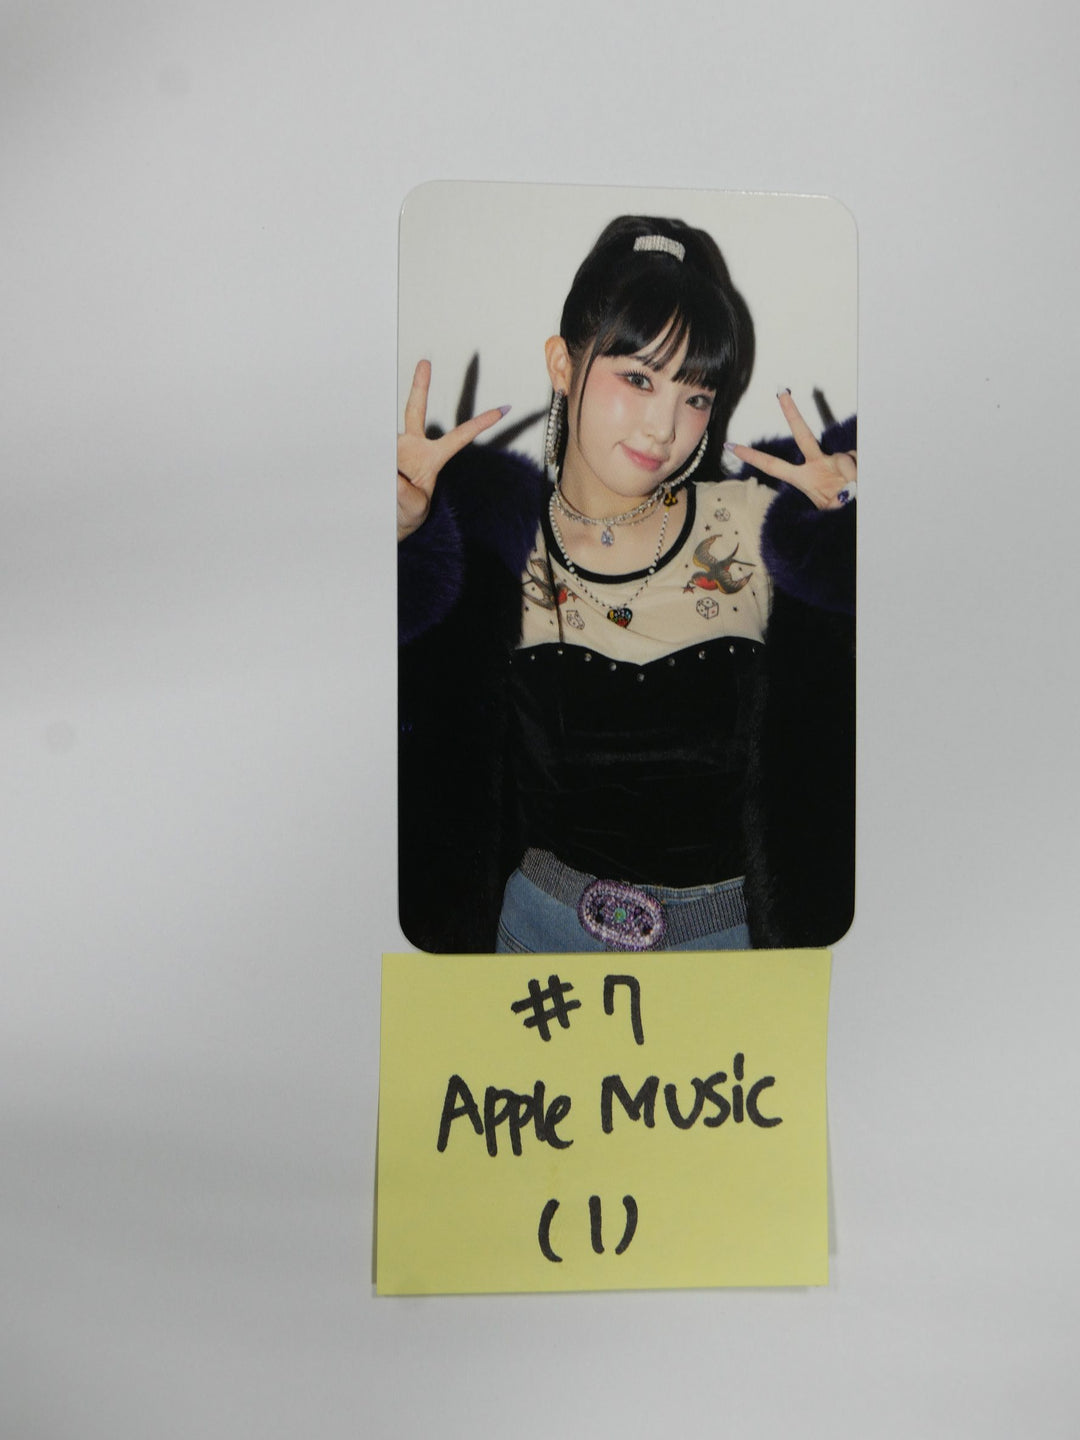 YENA "ˣ‿ˣ (SMiLEY)" - Apple Music Pre-Order Benefit Phtocard